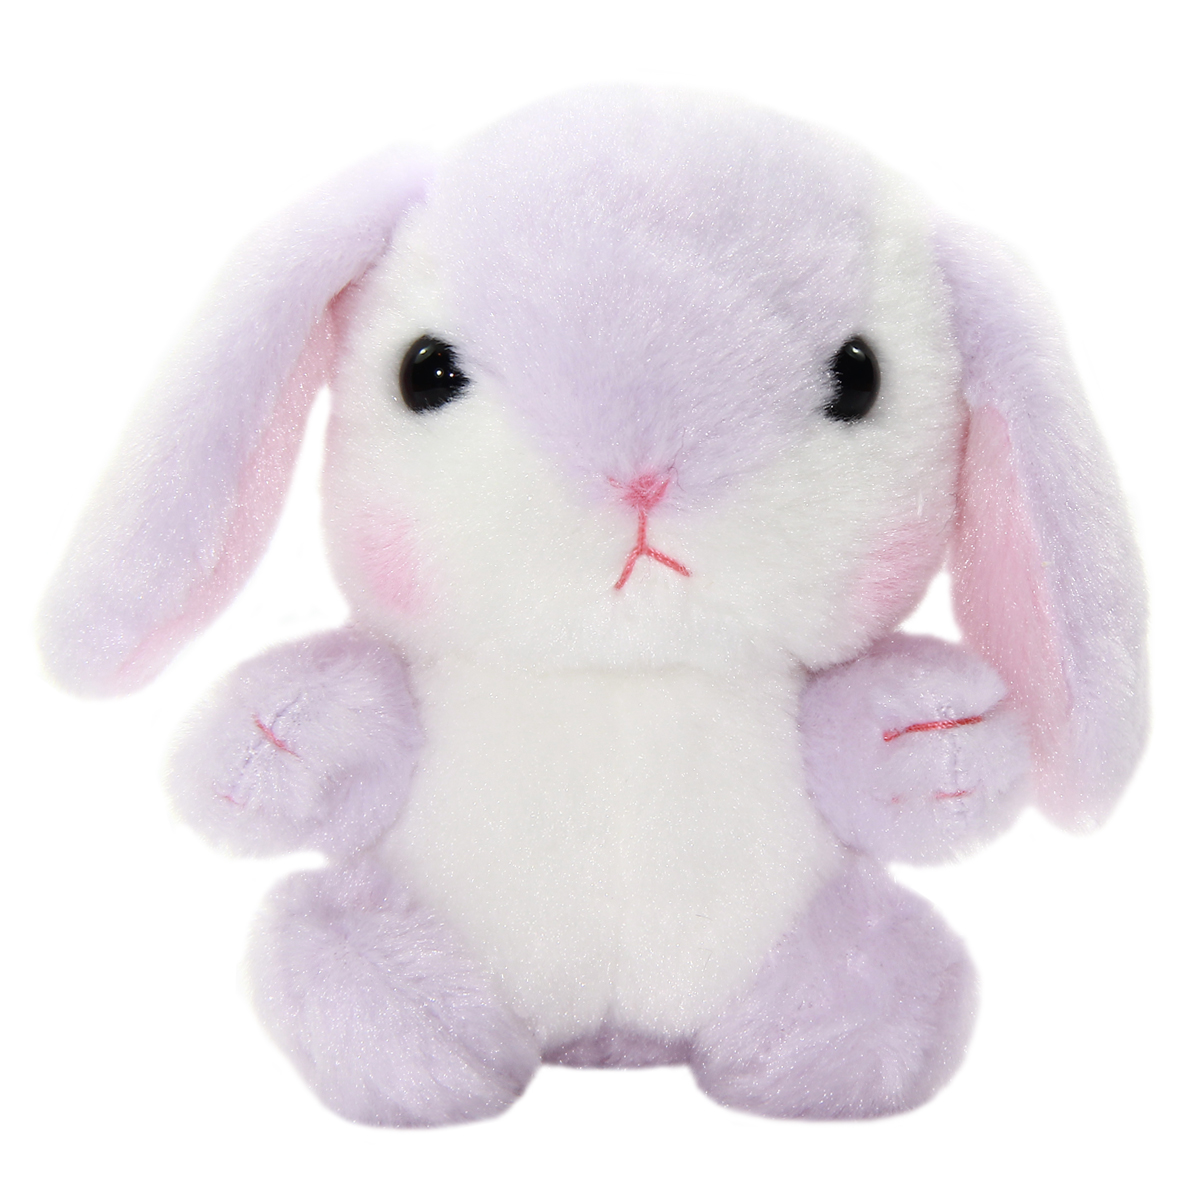 Amuse Bunny Plushie Cute Stuffed Animal Toy Purple / White 5 Inches